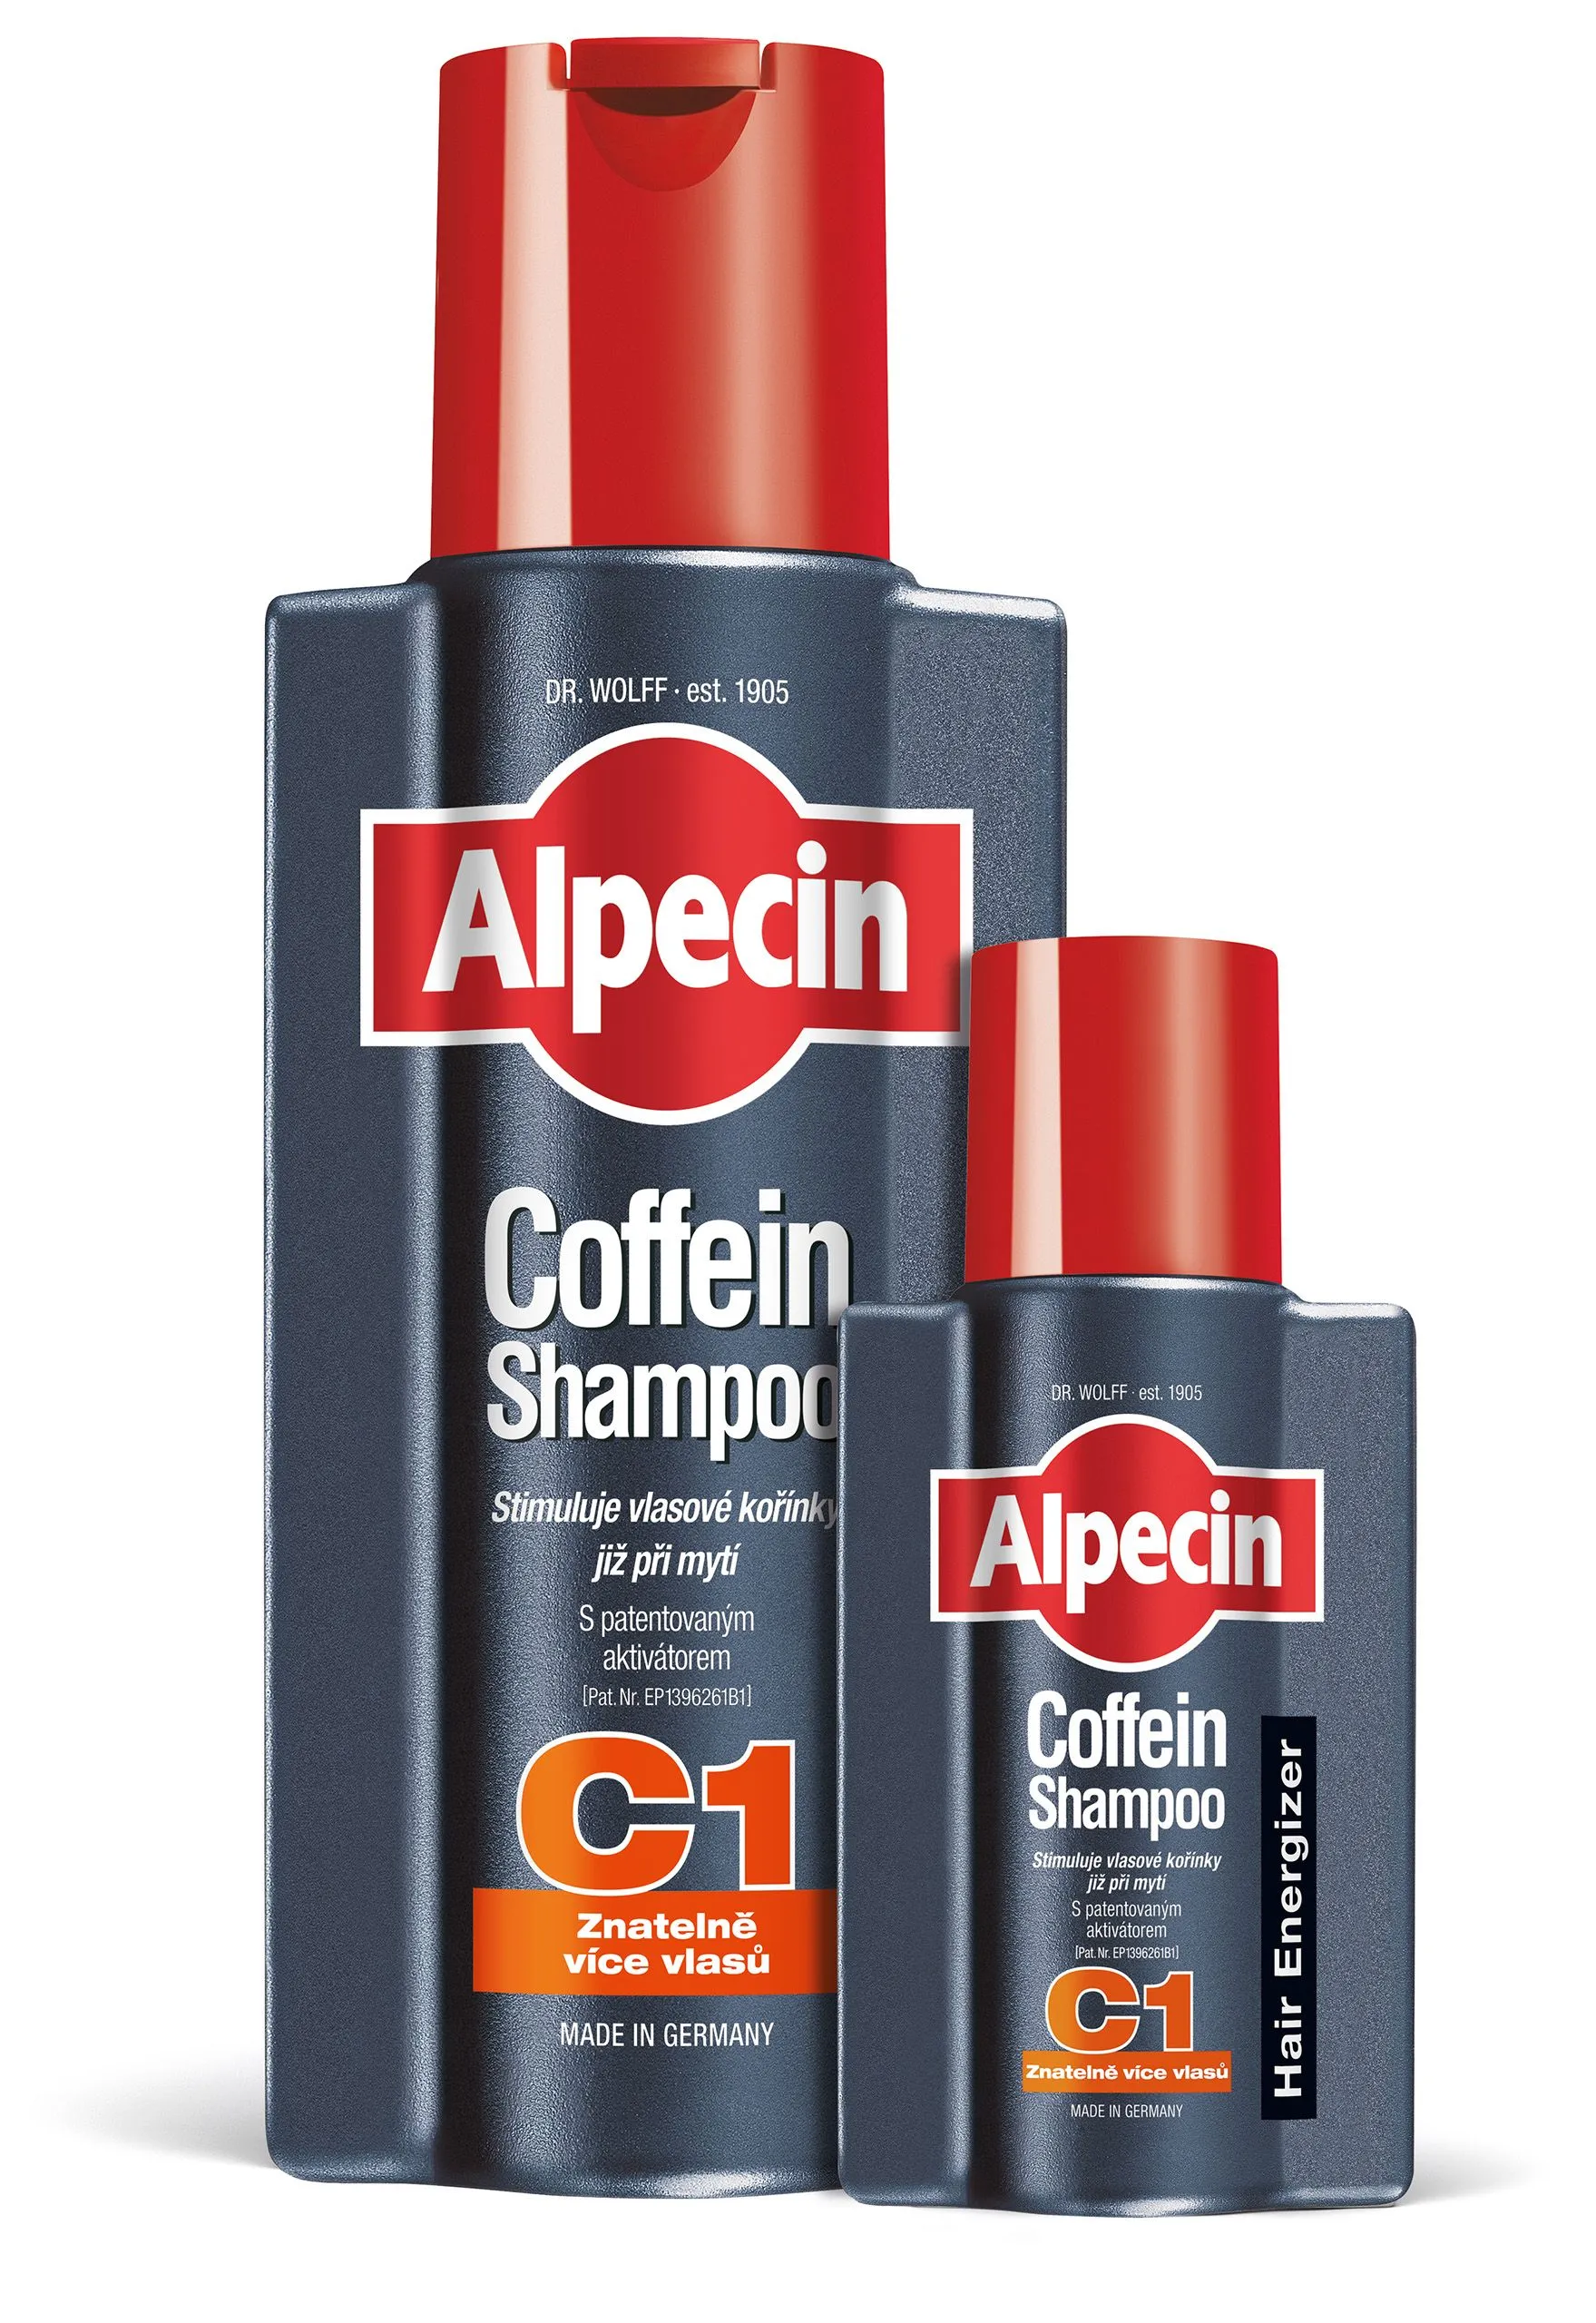 ALPECIN C1 Coffein Shampoo Promo Pack 250ml + 75ml